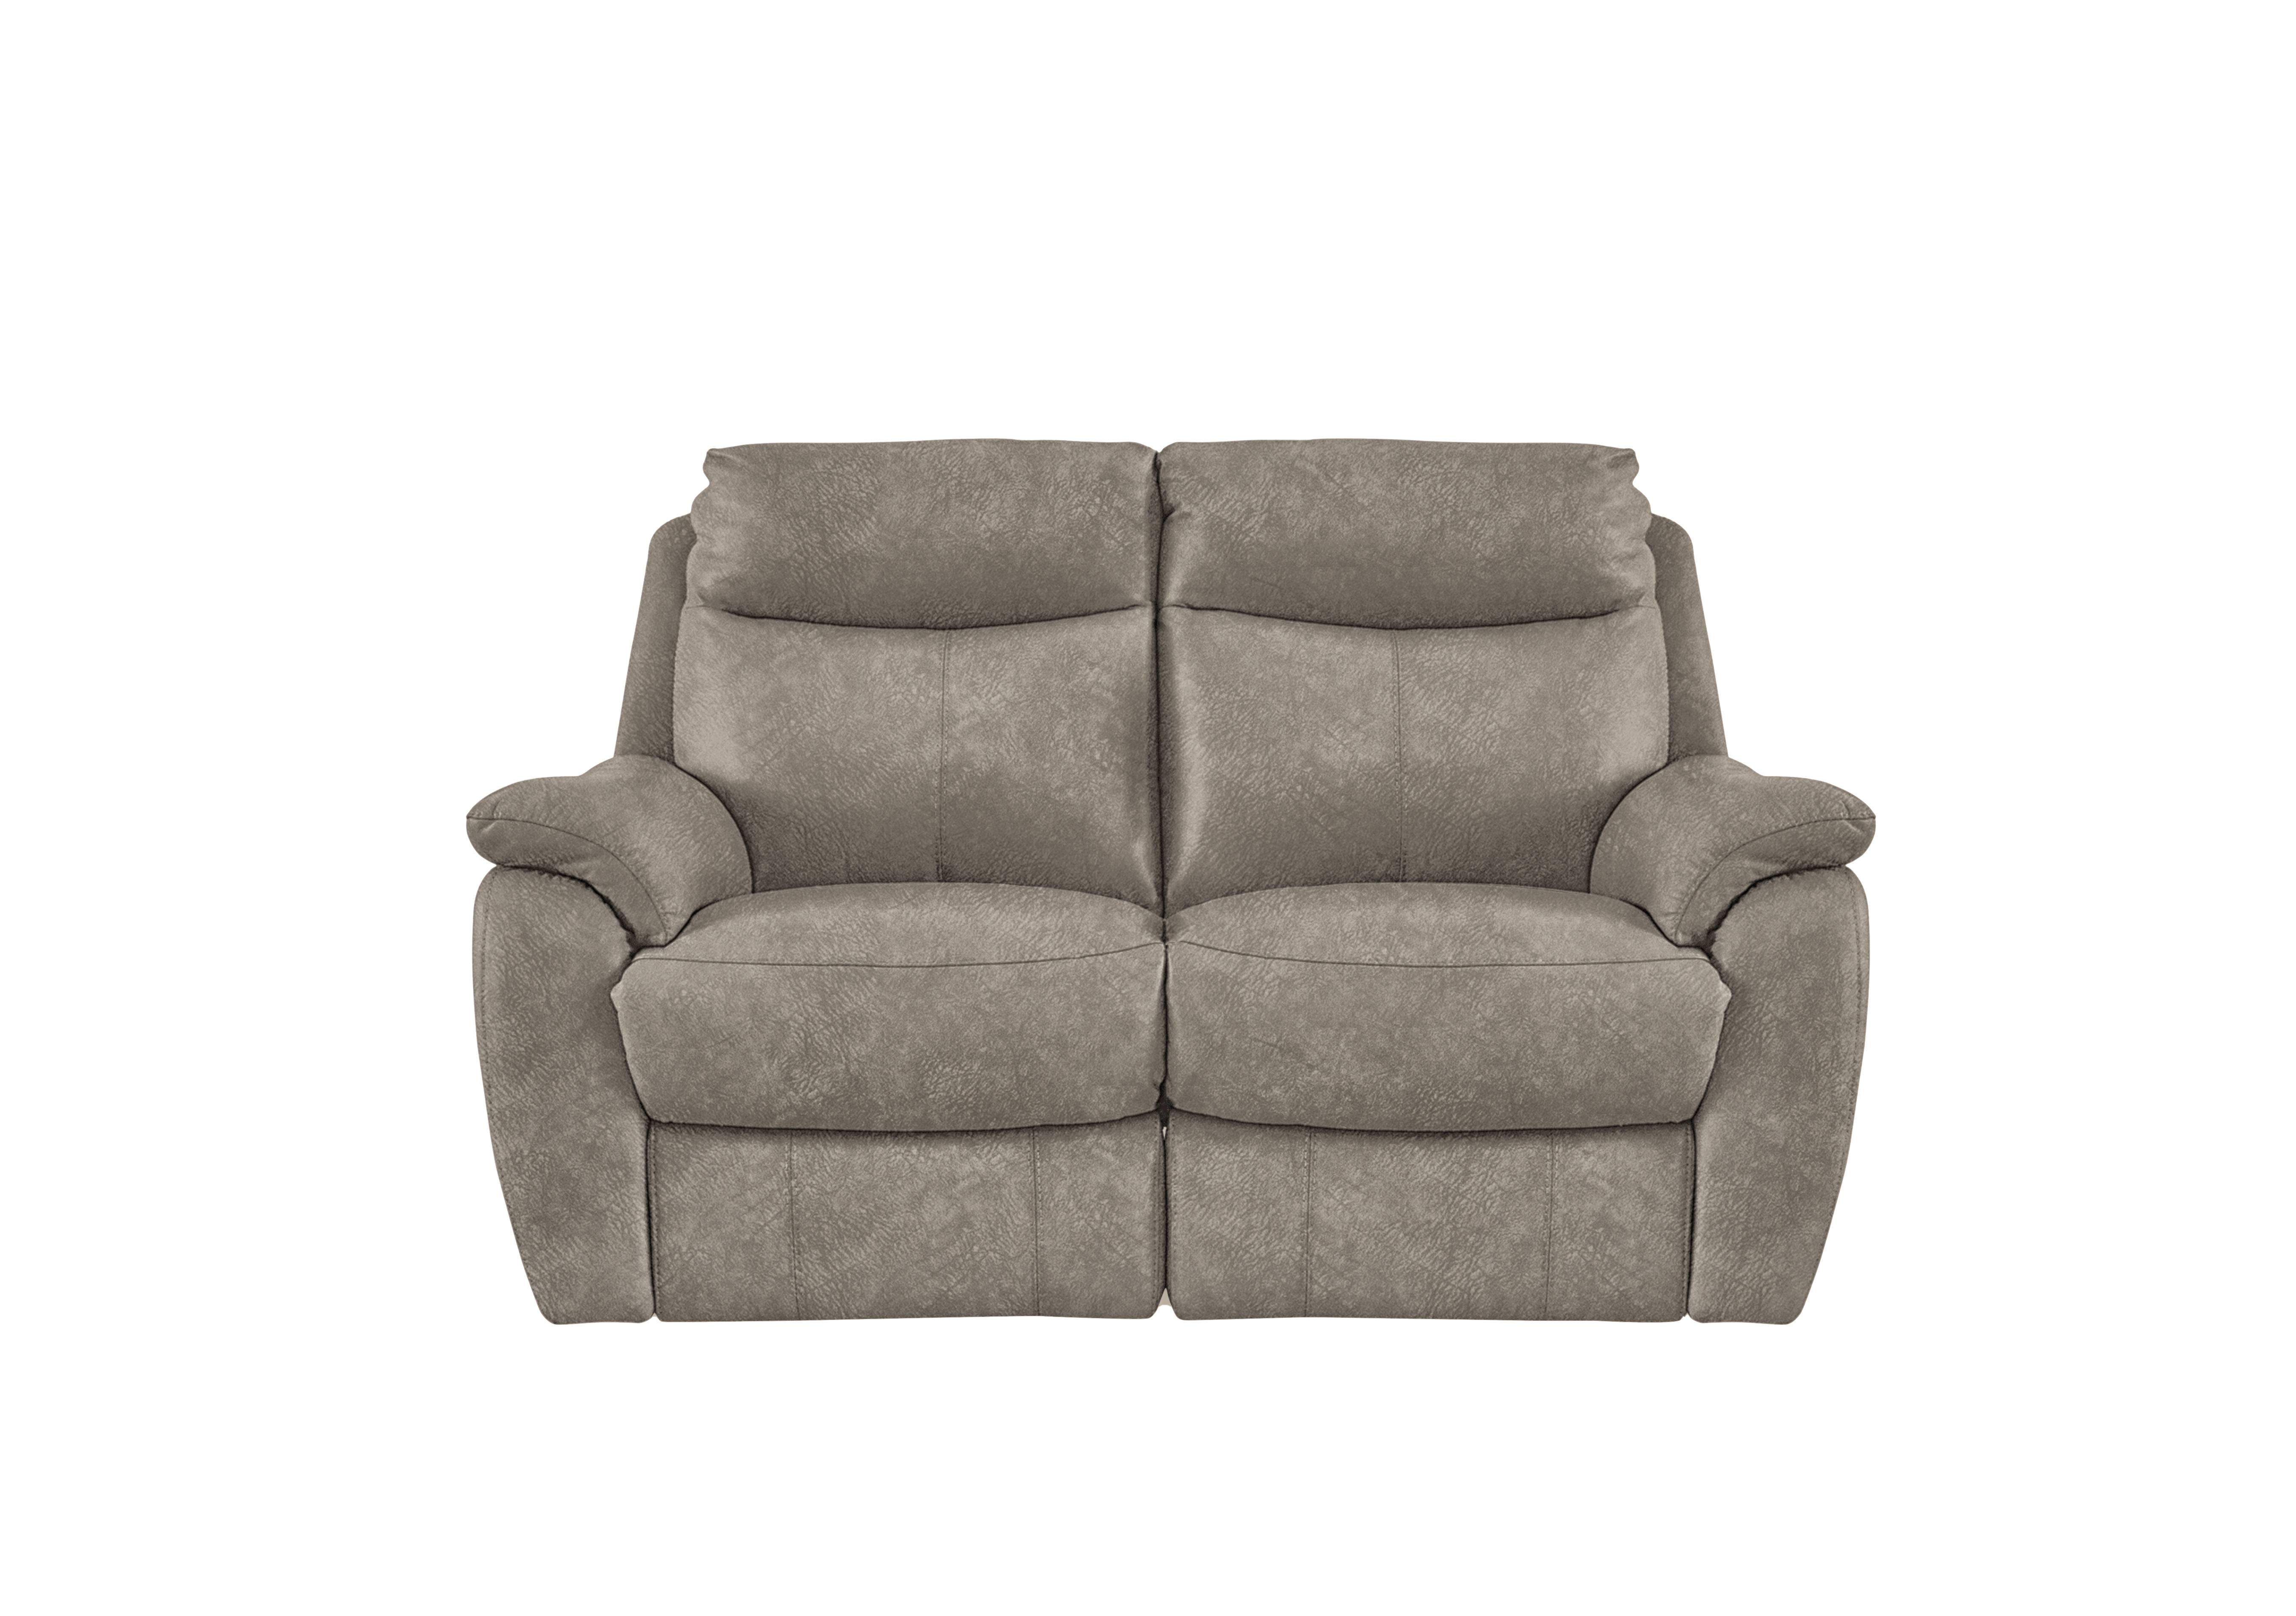 Snug 2 Seater Fabric Sofa in Bfa-Bnn-R29 Fv1 Mink on Furniture Village